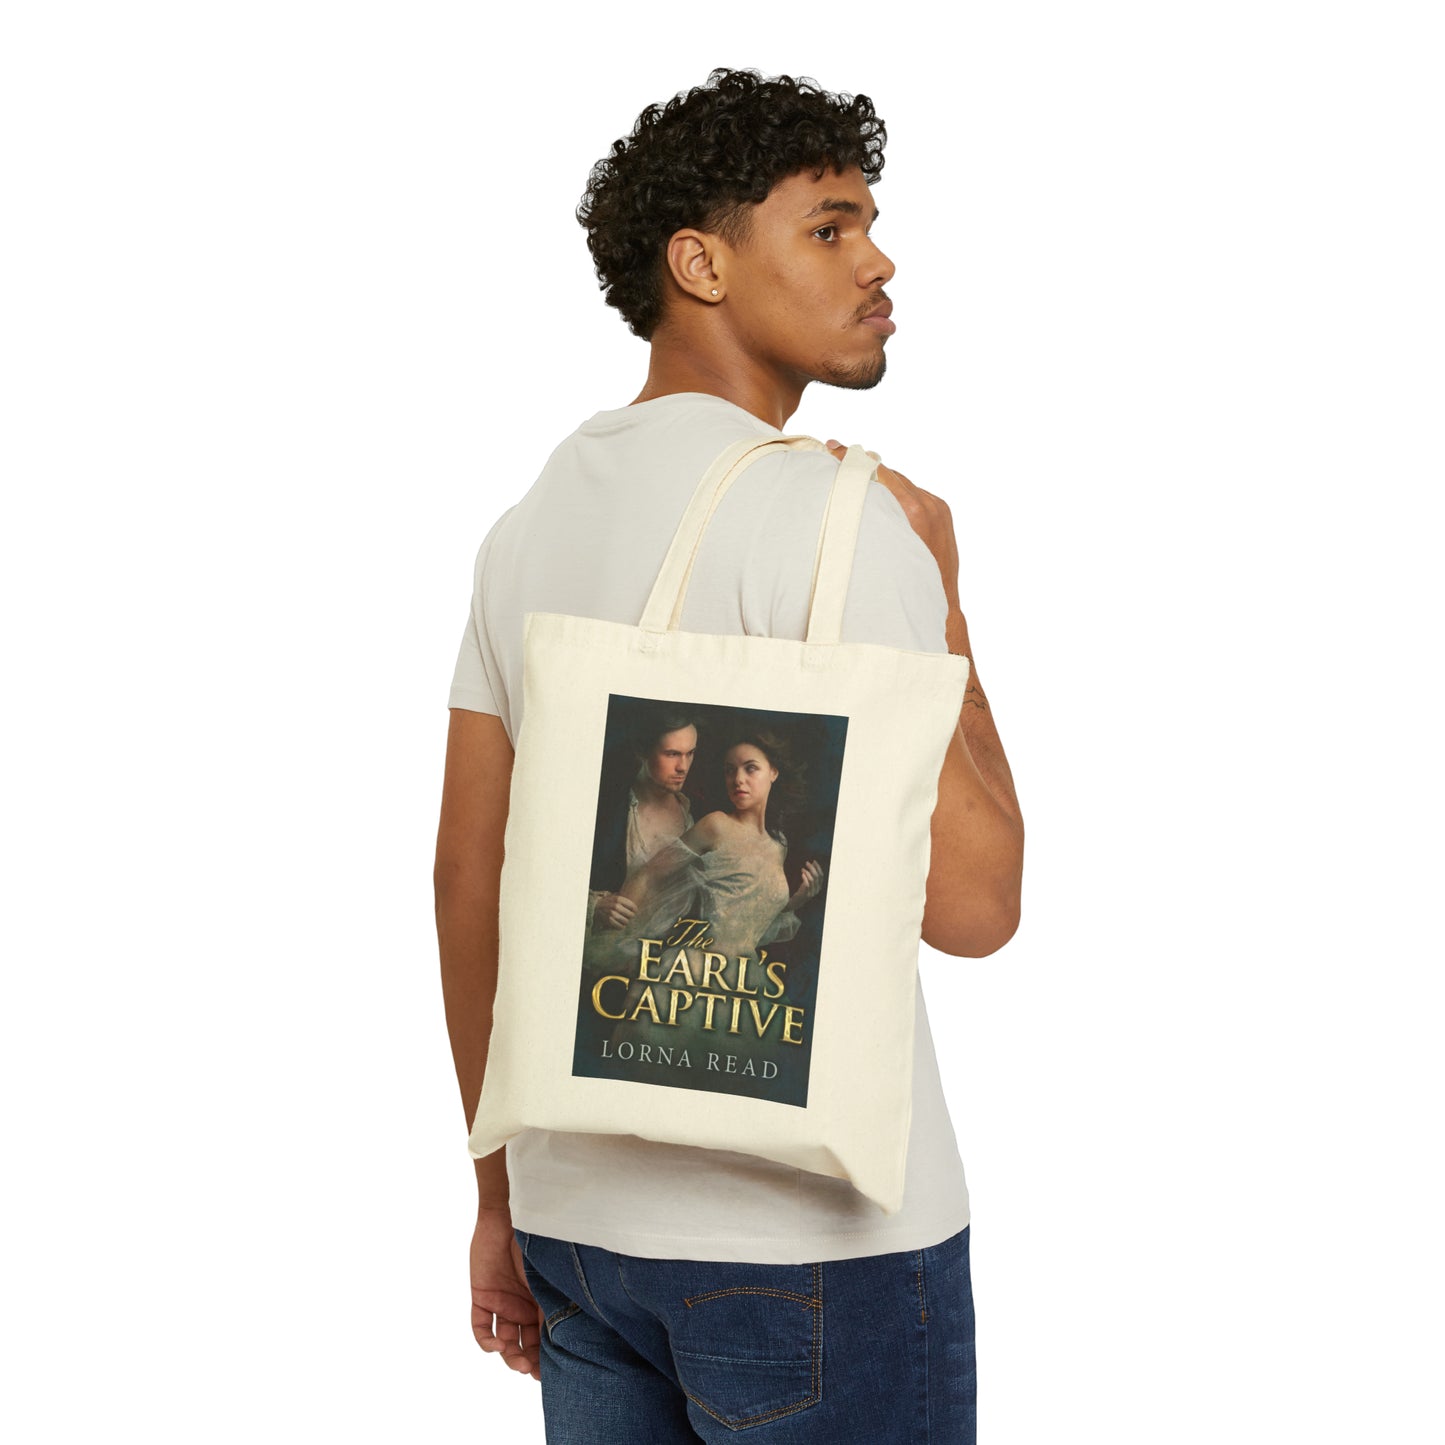 The Earl's Captive - Cotton Canvas Tote Bag